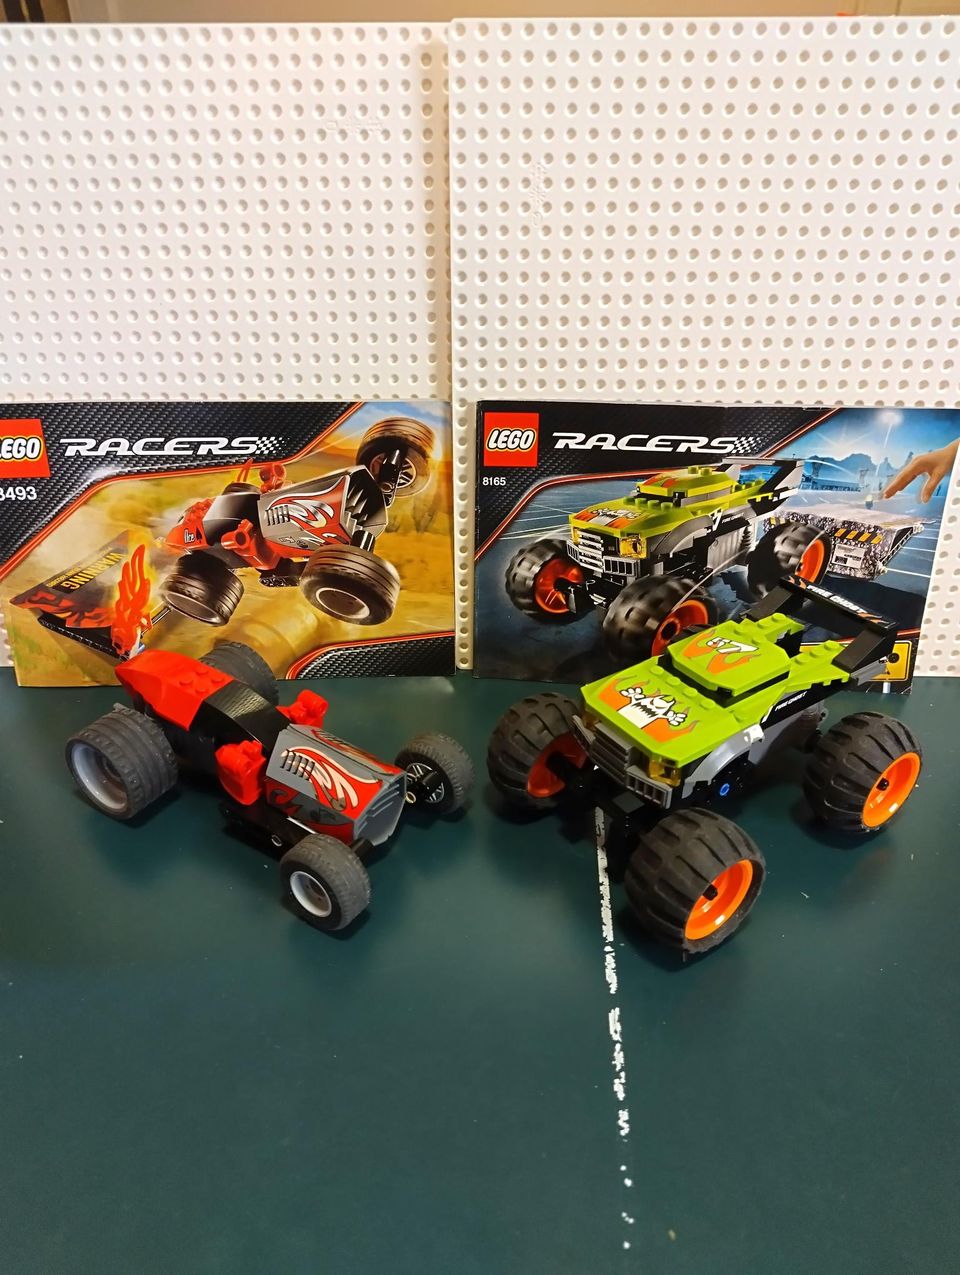 Lego 8493 ja 8165, Racers autot